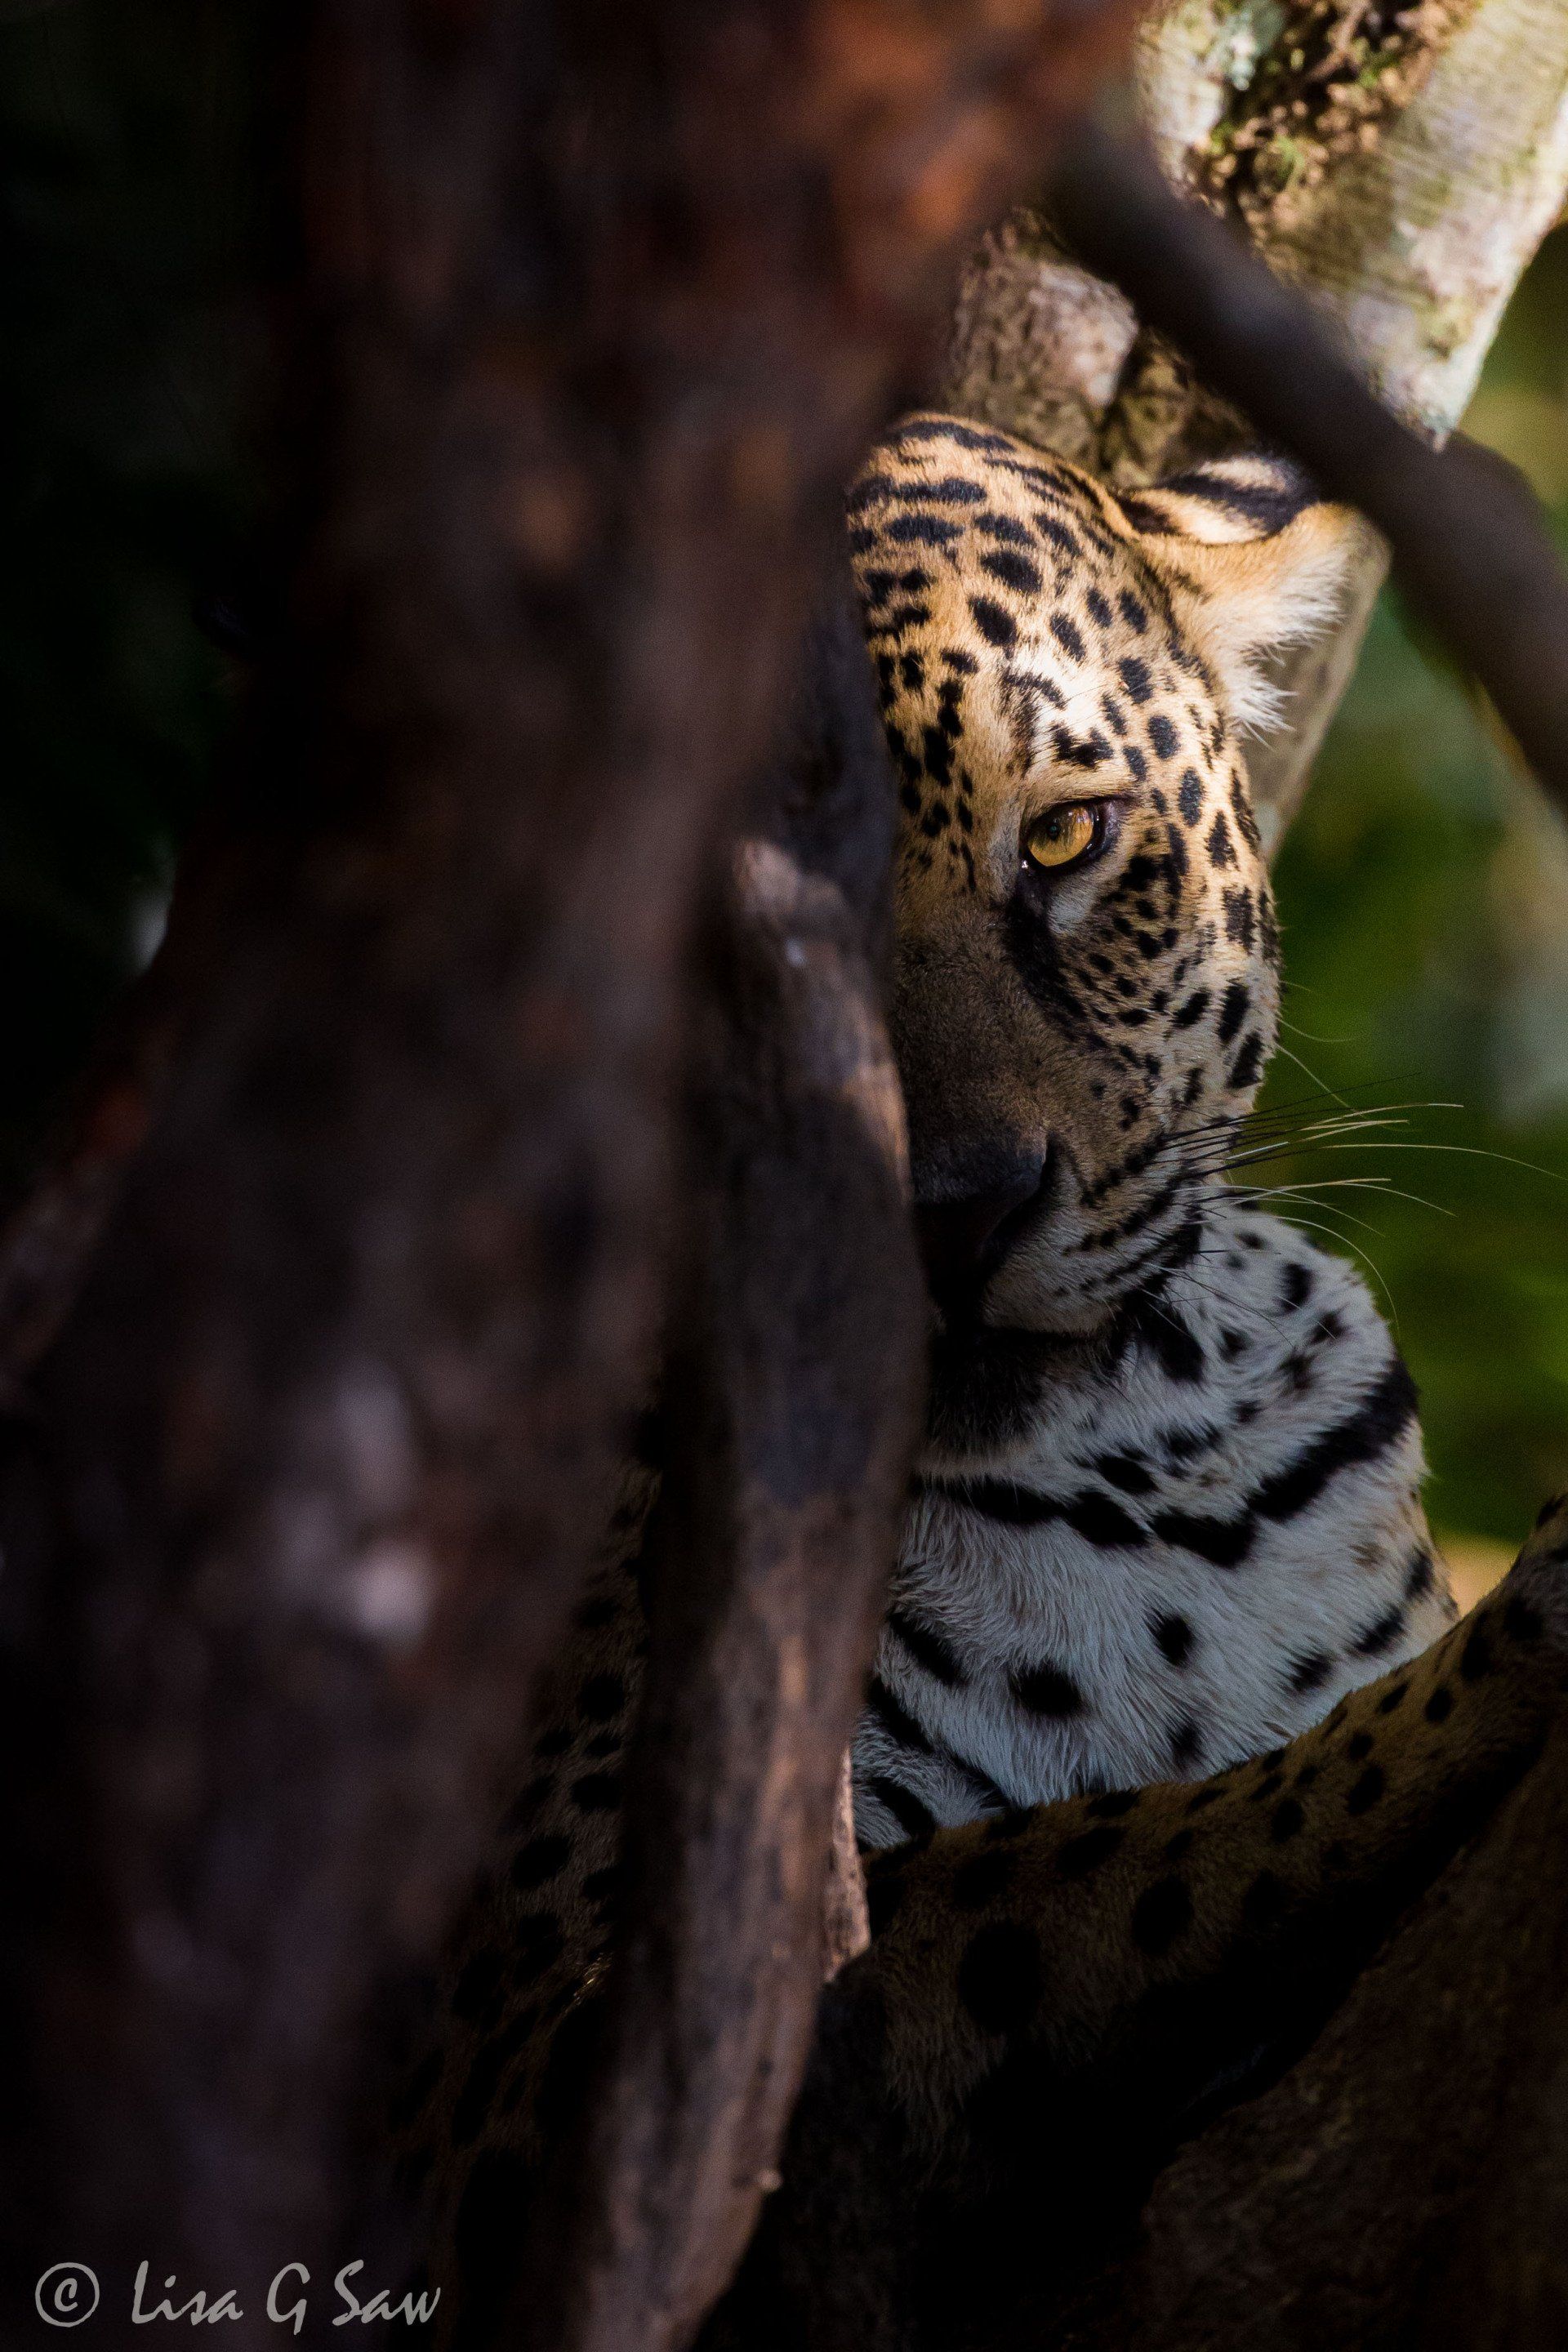 Jaguar partially hidden in shadows by tree